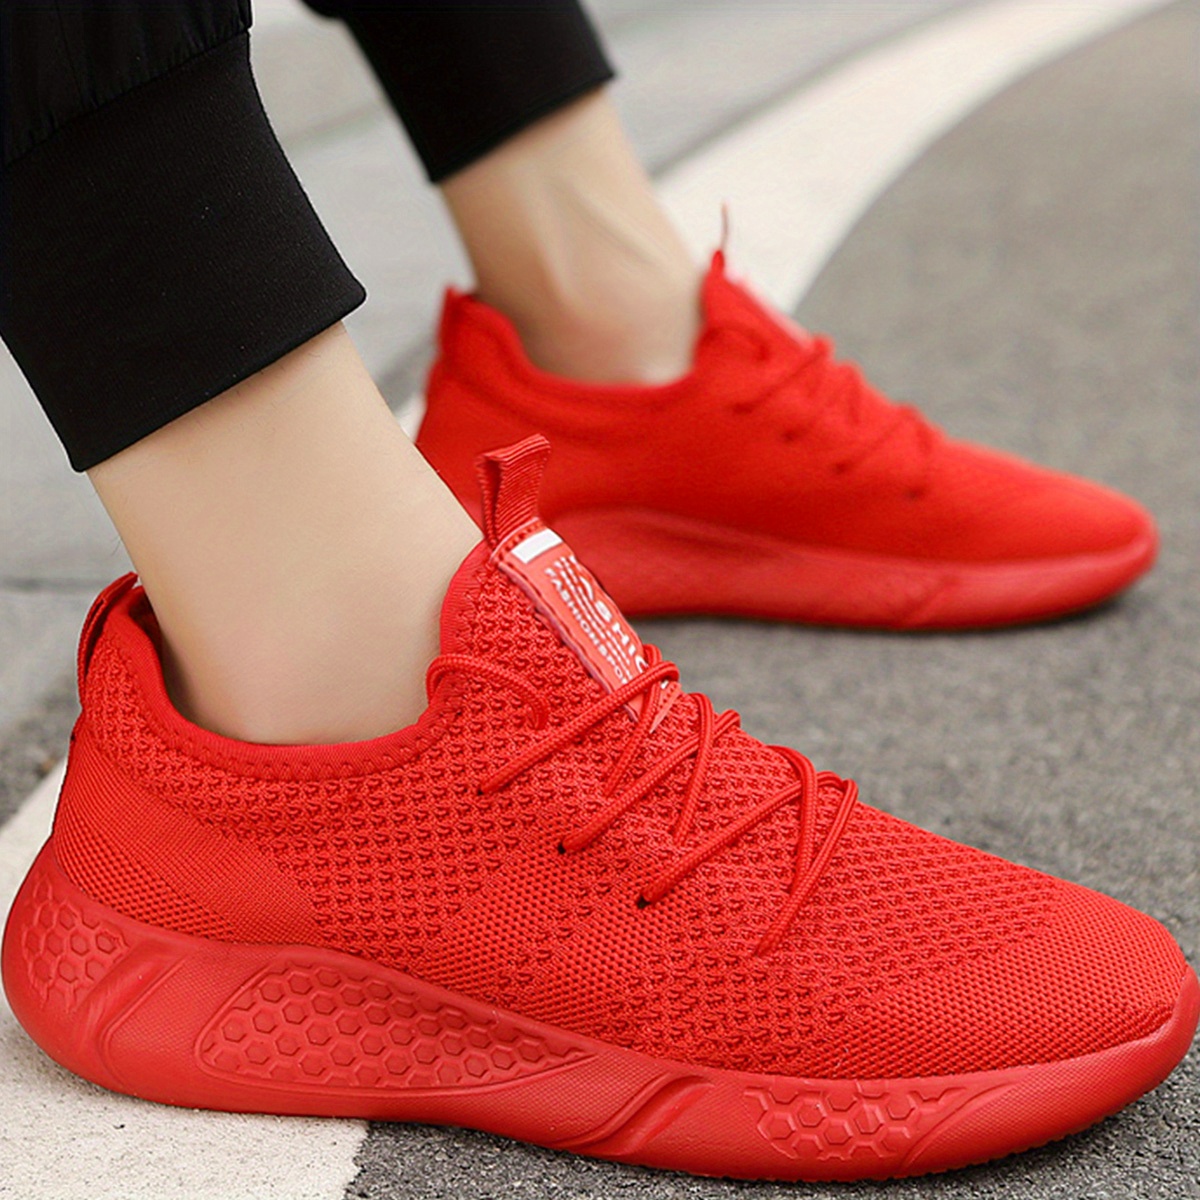 mens lightweight breathable shoes for jogging running walking details 11